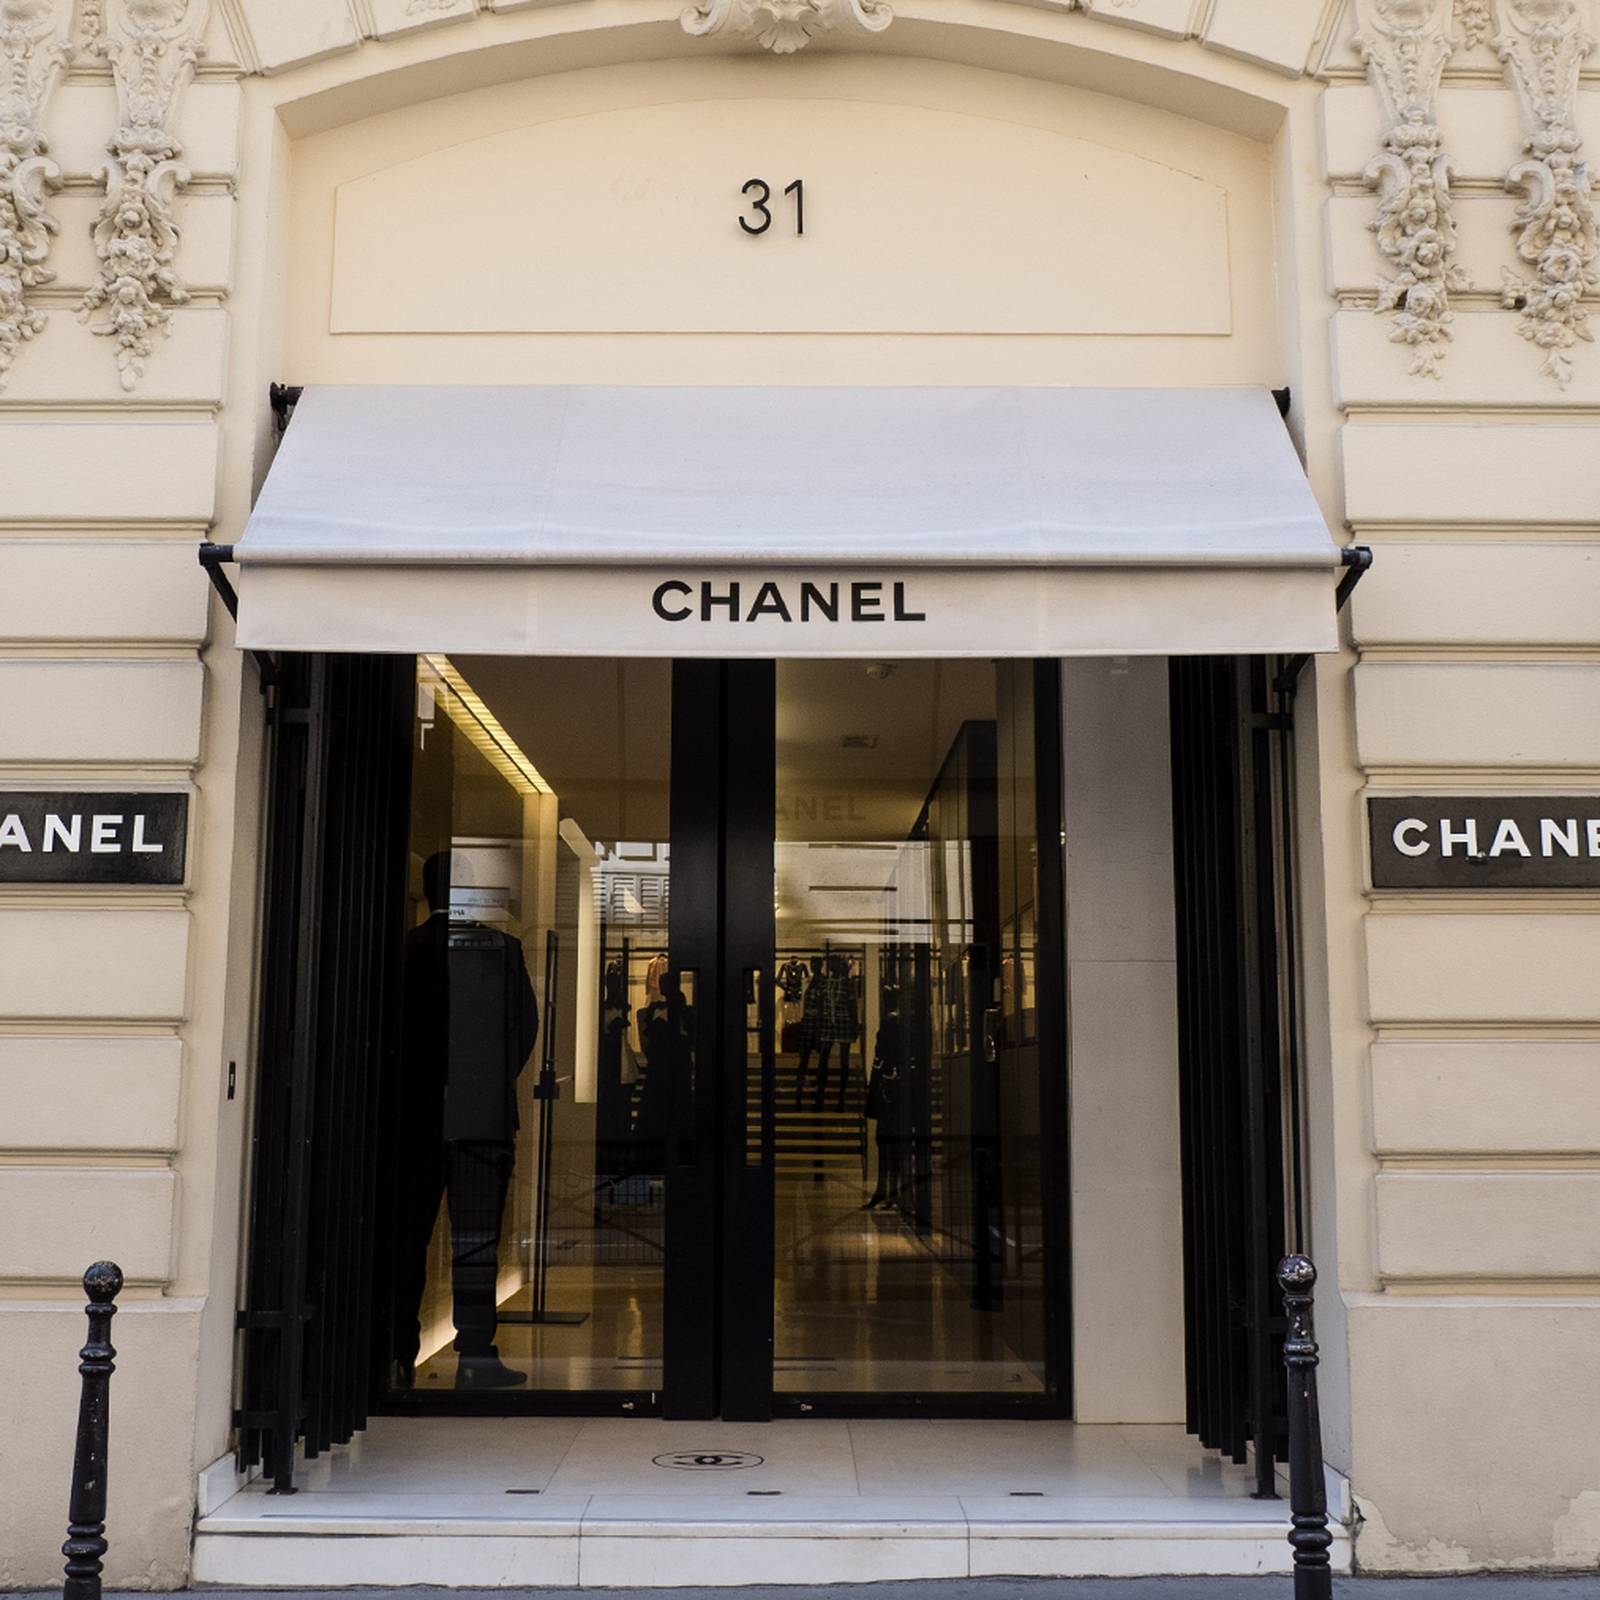 Does Chanel's Stance on E-Commerce Make Sense?